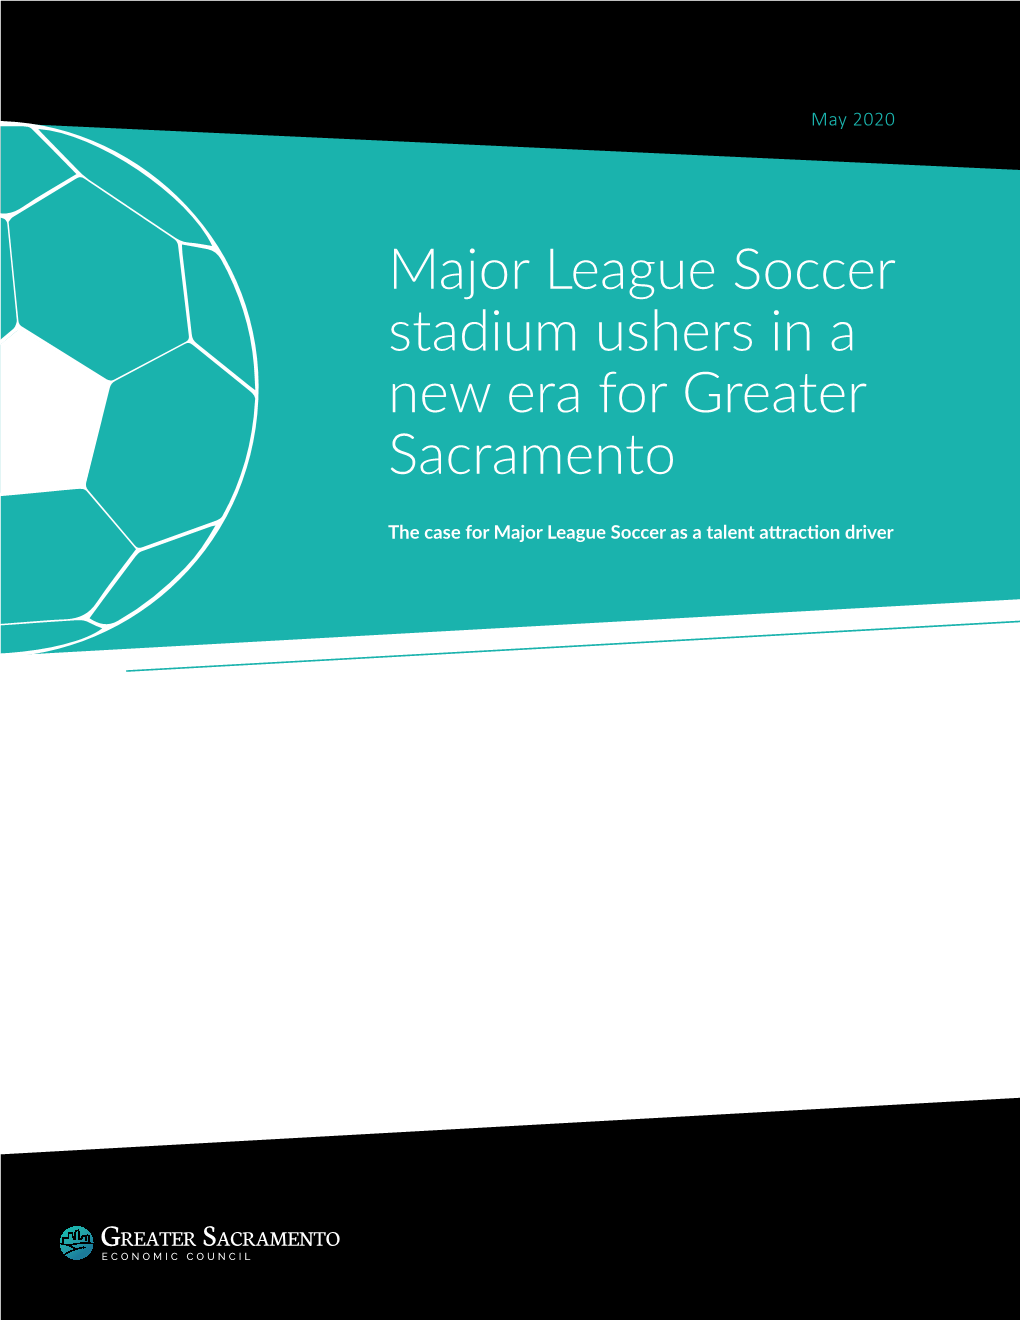 Major League Soccer Stadium Ushers in a New Era for Greater Sacramento